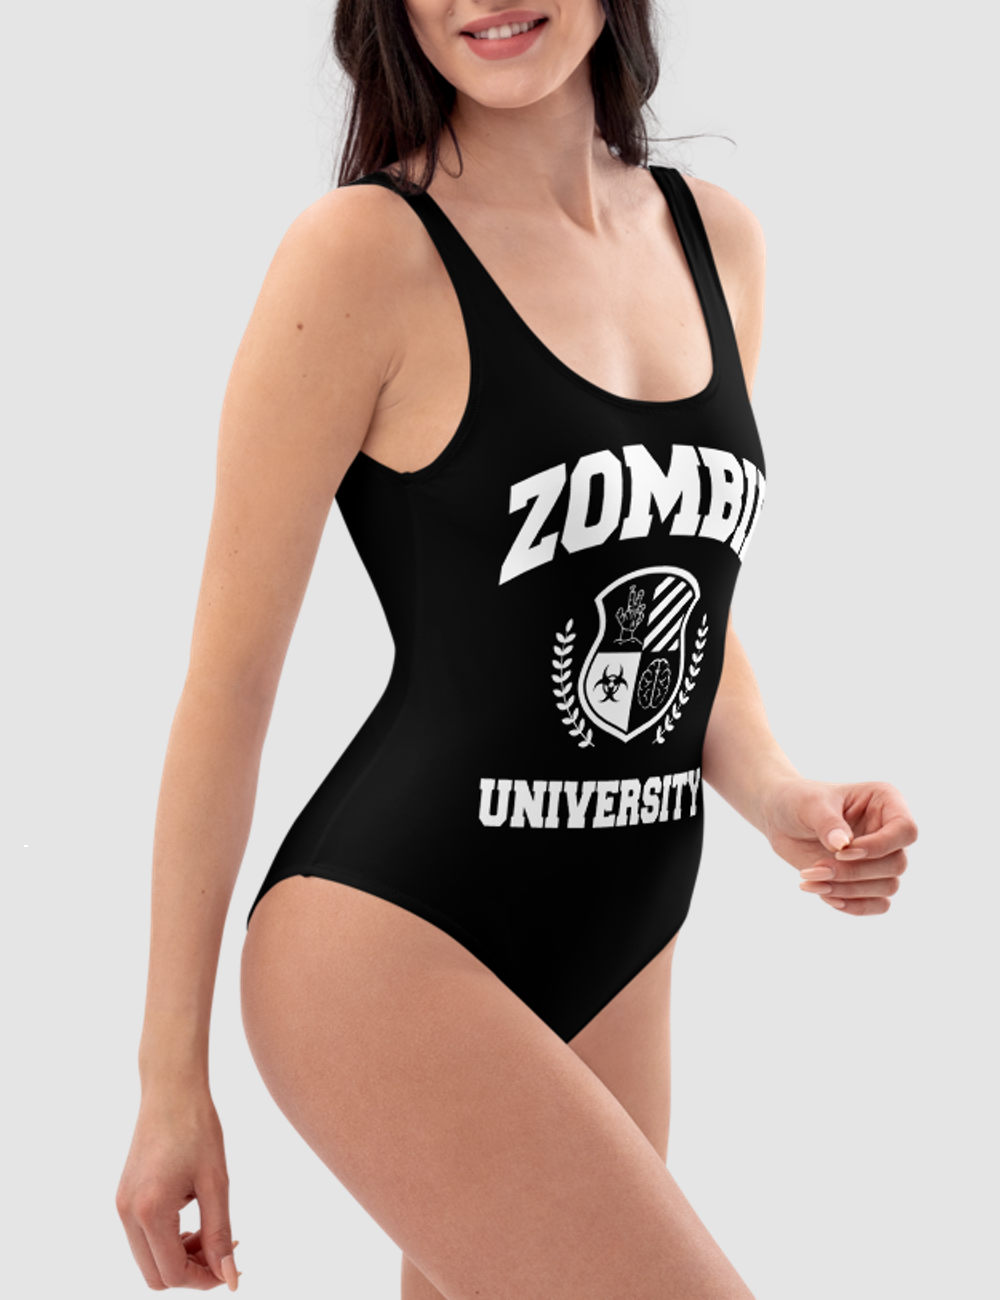 Zombie University Women's One-Piece Swimsuit OniTakai